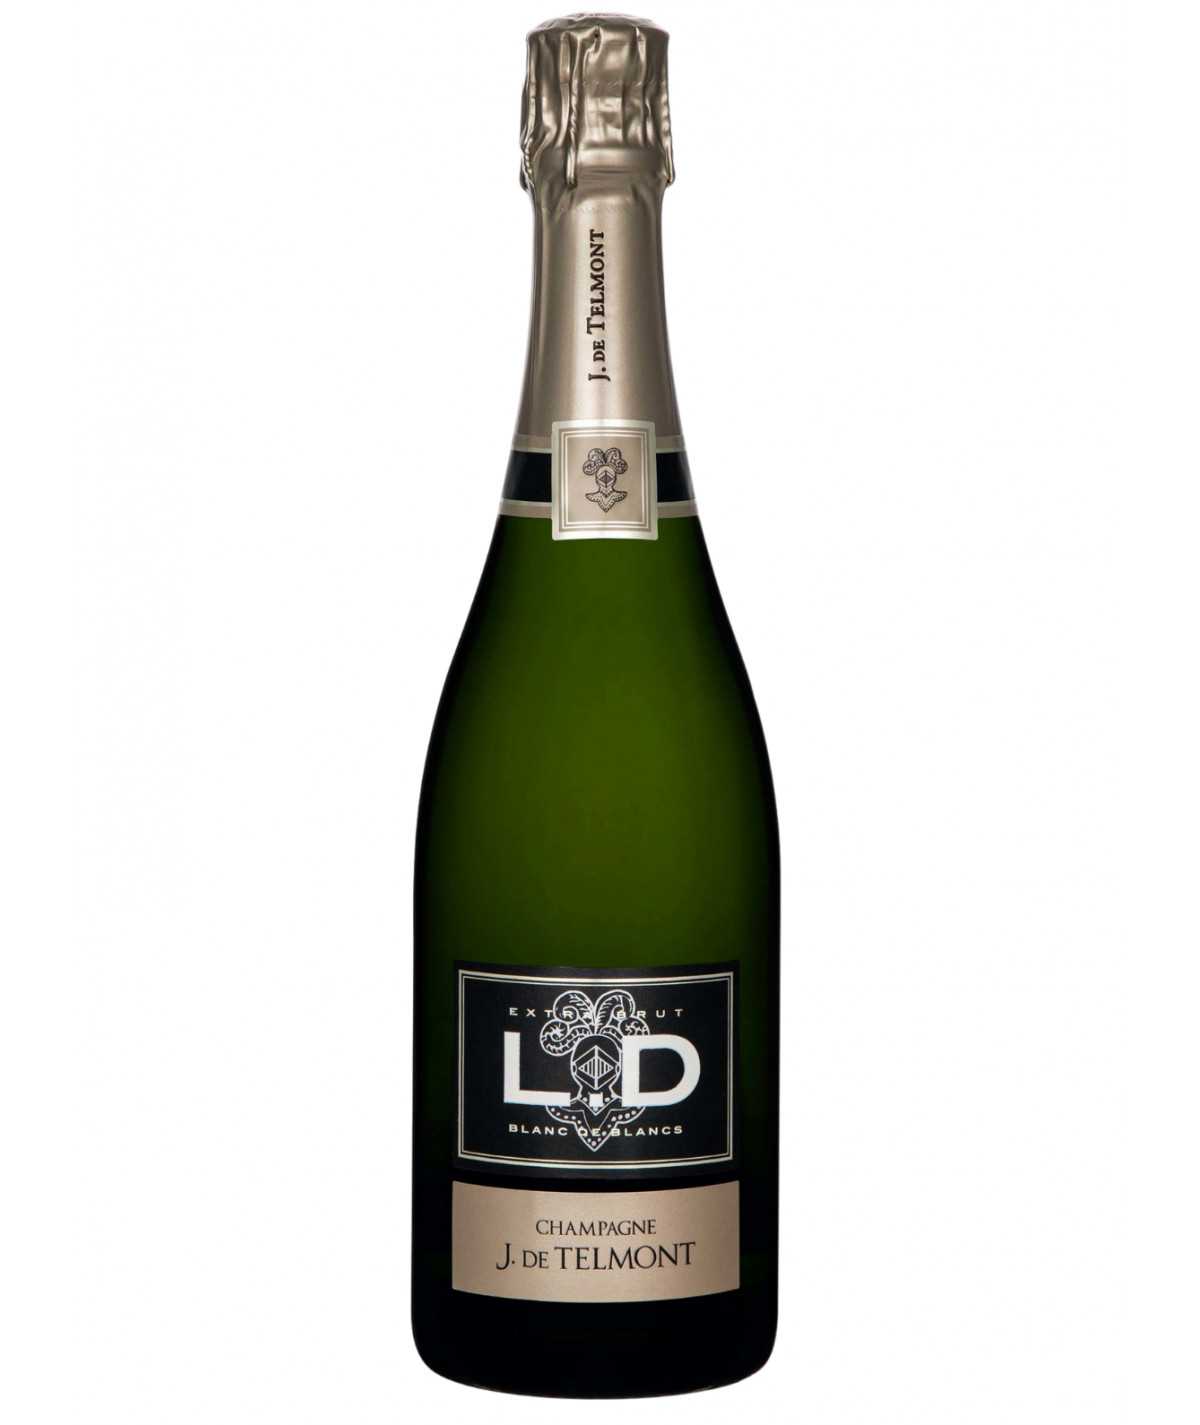 J. DE TELMONT Champagner Cuvée L.D Extra Brut 2009 Jahrgang